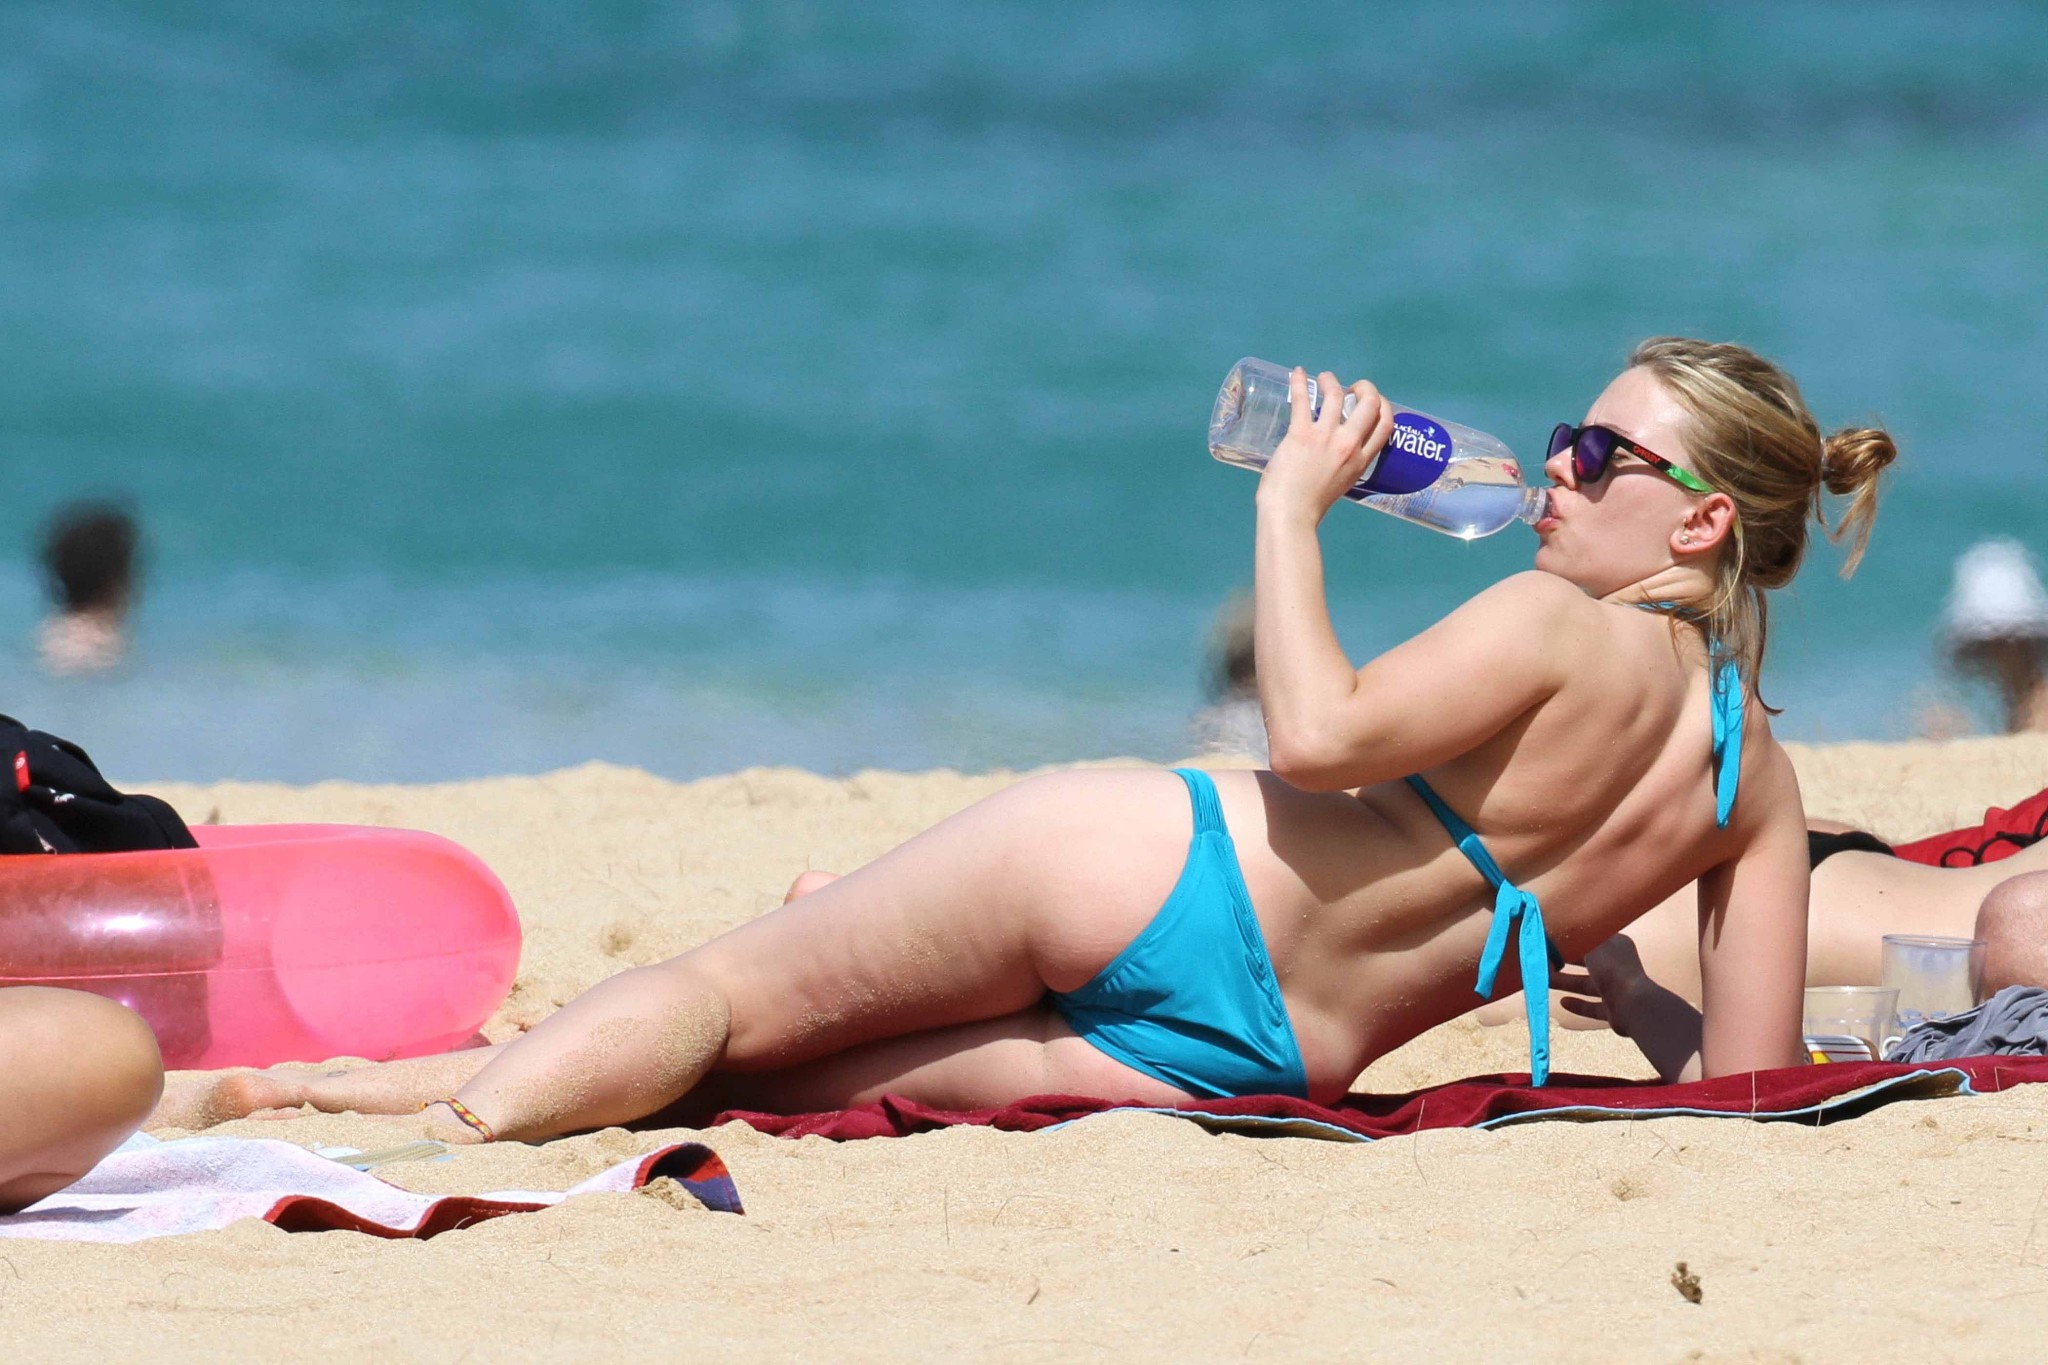 Scarlett johansson portant un bikini bleu ciel sur une plage hawaïenne.
 #75274370